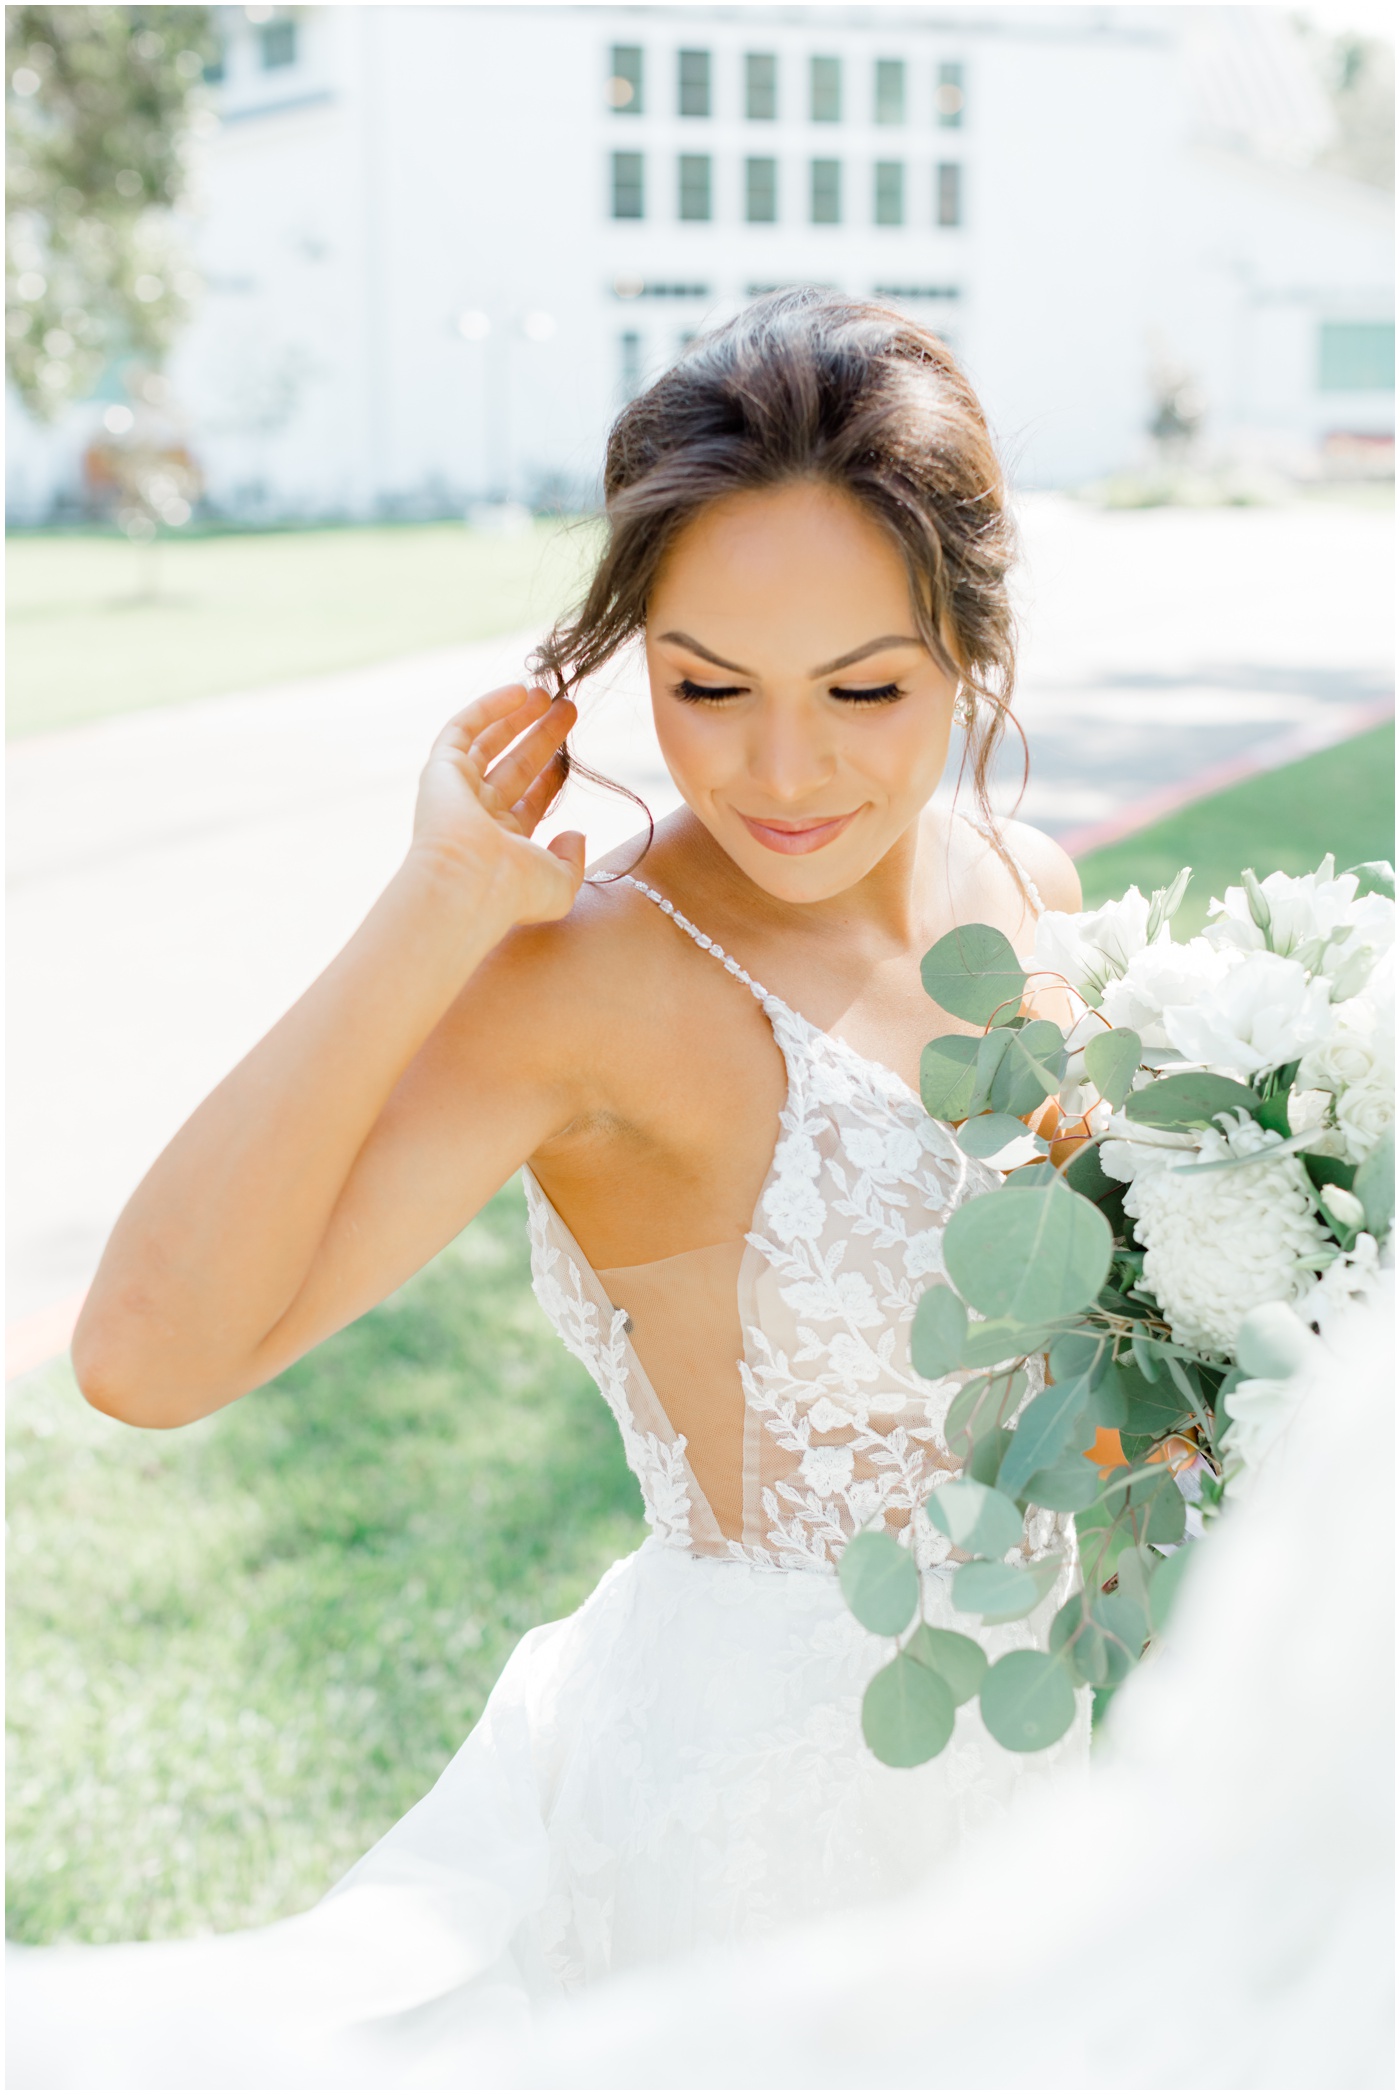 wedding photographer in Texas captures stunning bridal portrait